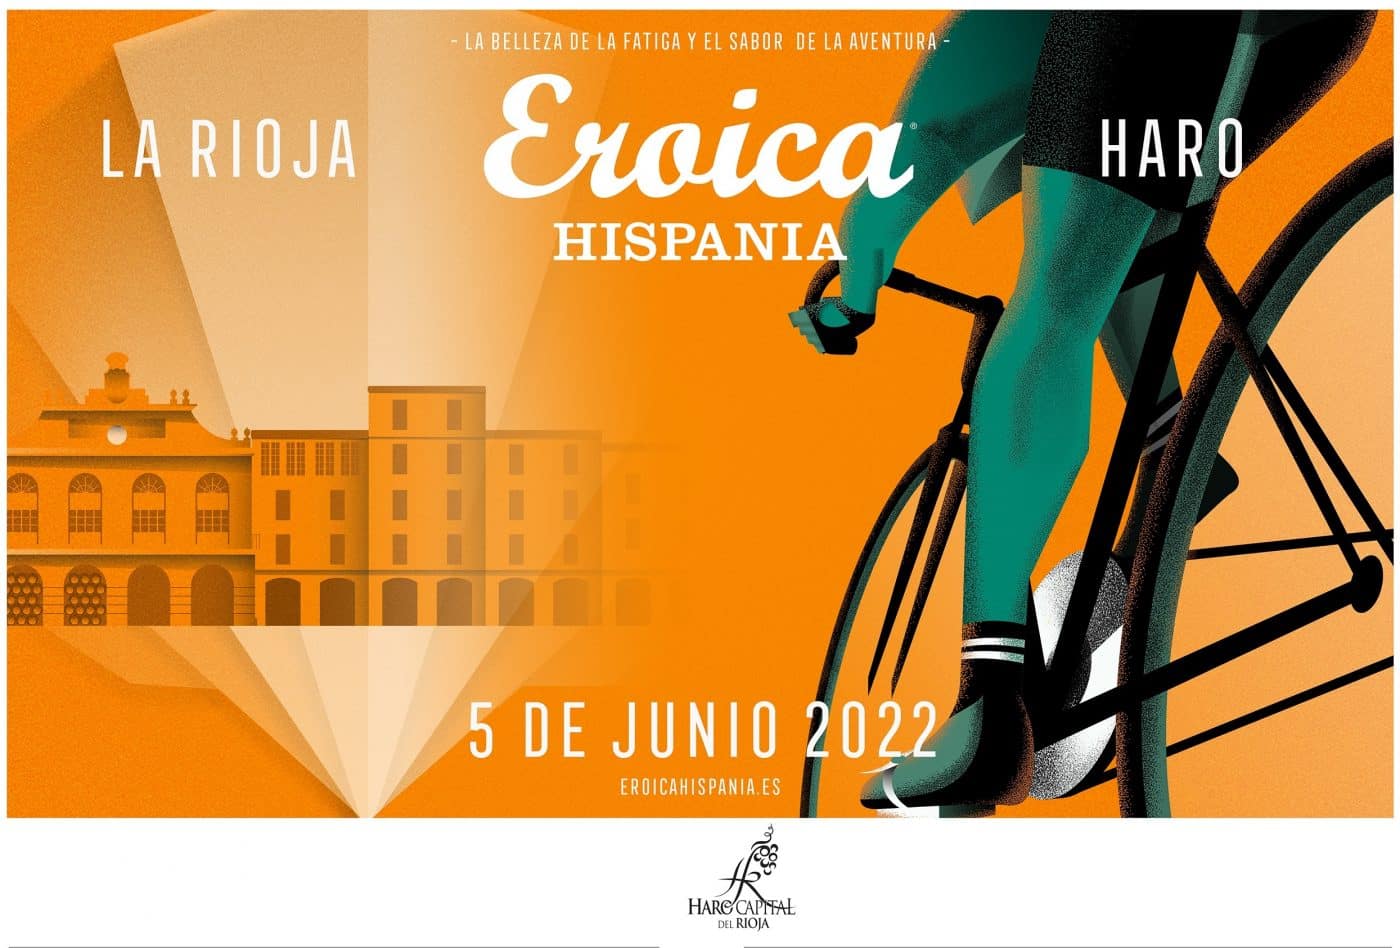 Eroica Hispania convierte a Haro en epicentro del ciclismo clásico 2